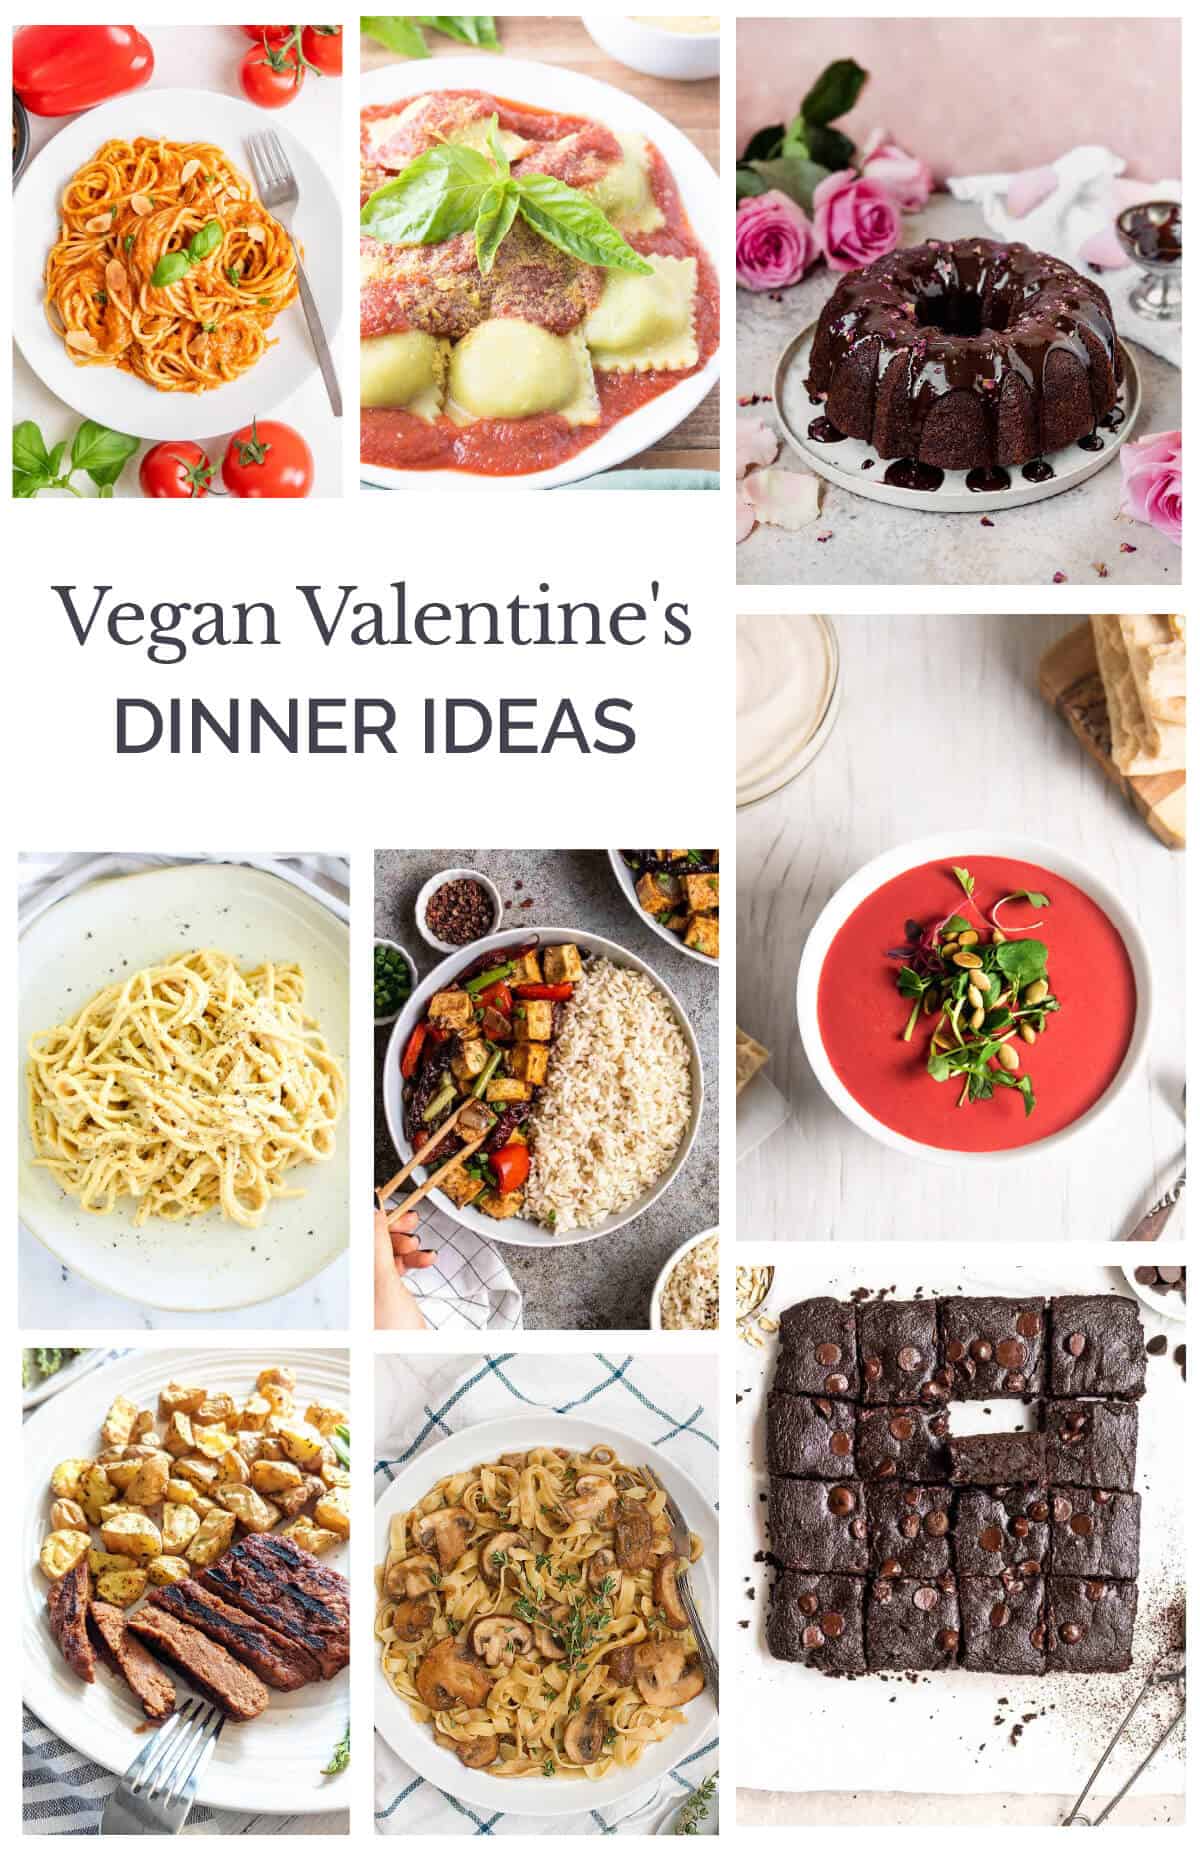 Recetas veganas para la cena de San Valentín | Our Plant-Based World